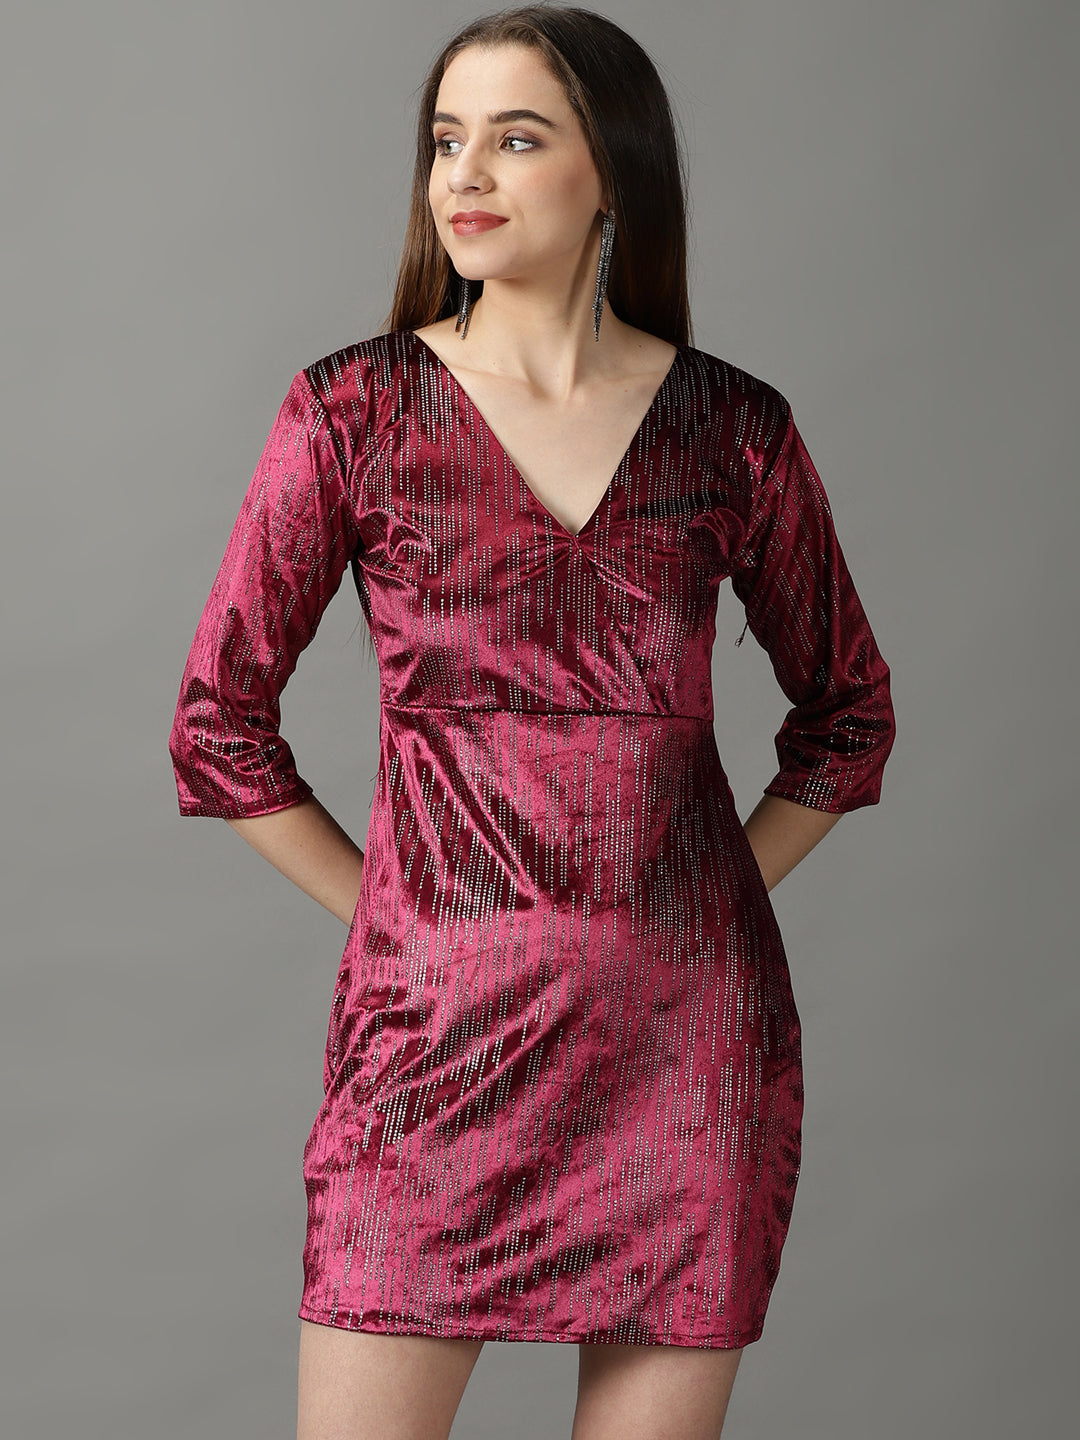 Women's Magenta Embellished Bodycon Dress